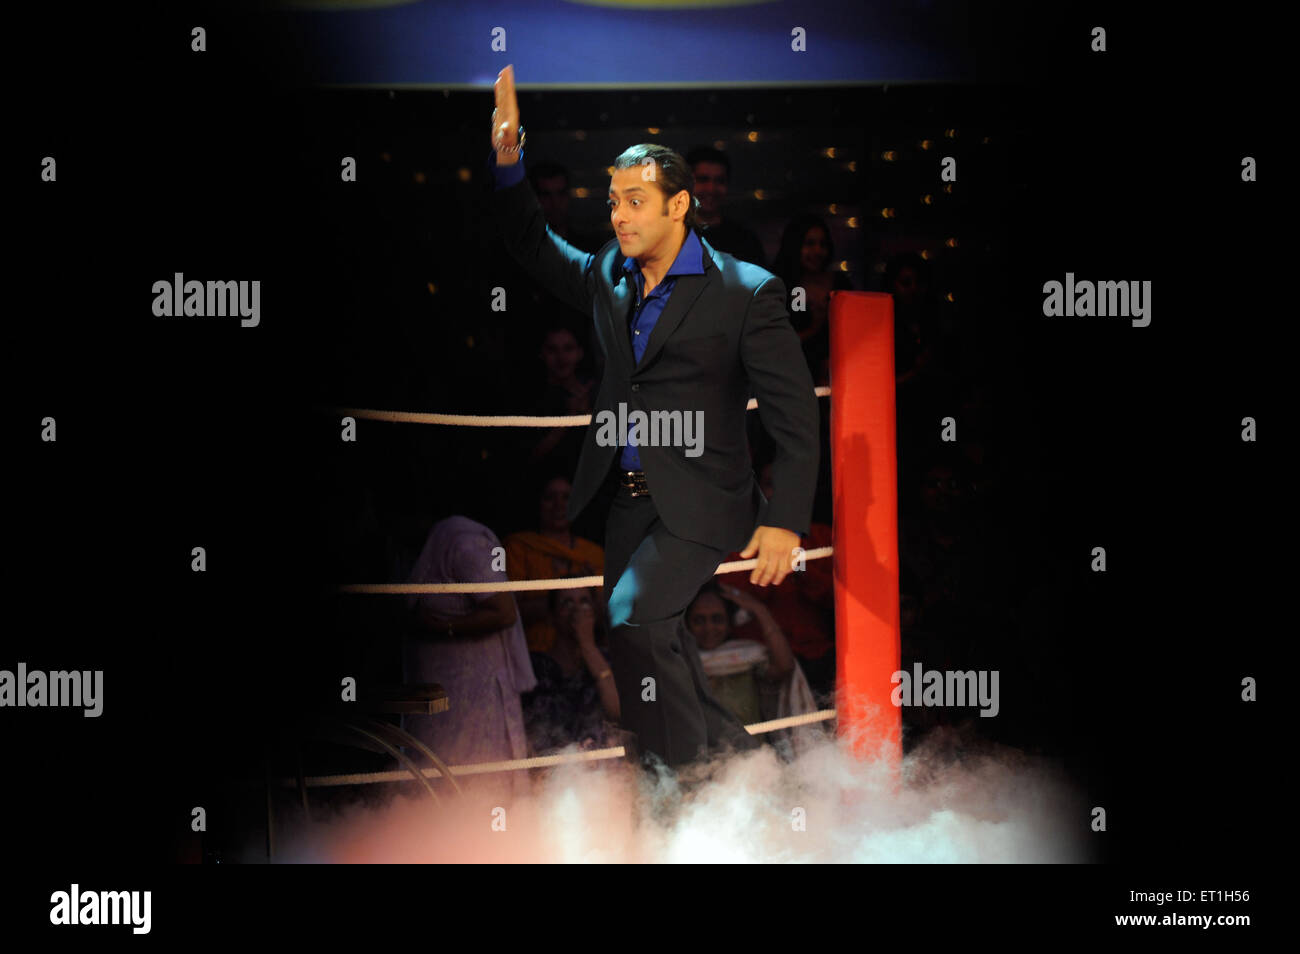 Salman Khan, Dus Ka Dum show, Abdul Rashid Salim Salman Khan, Indian actor, film producer, television personality, India, Asia Stock Photo